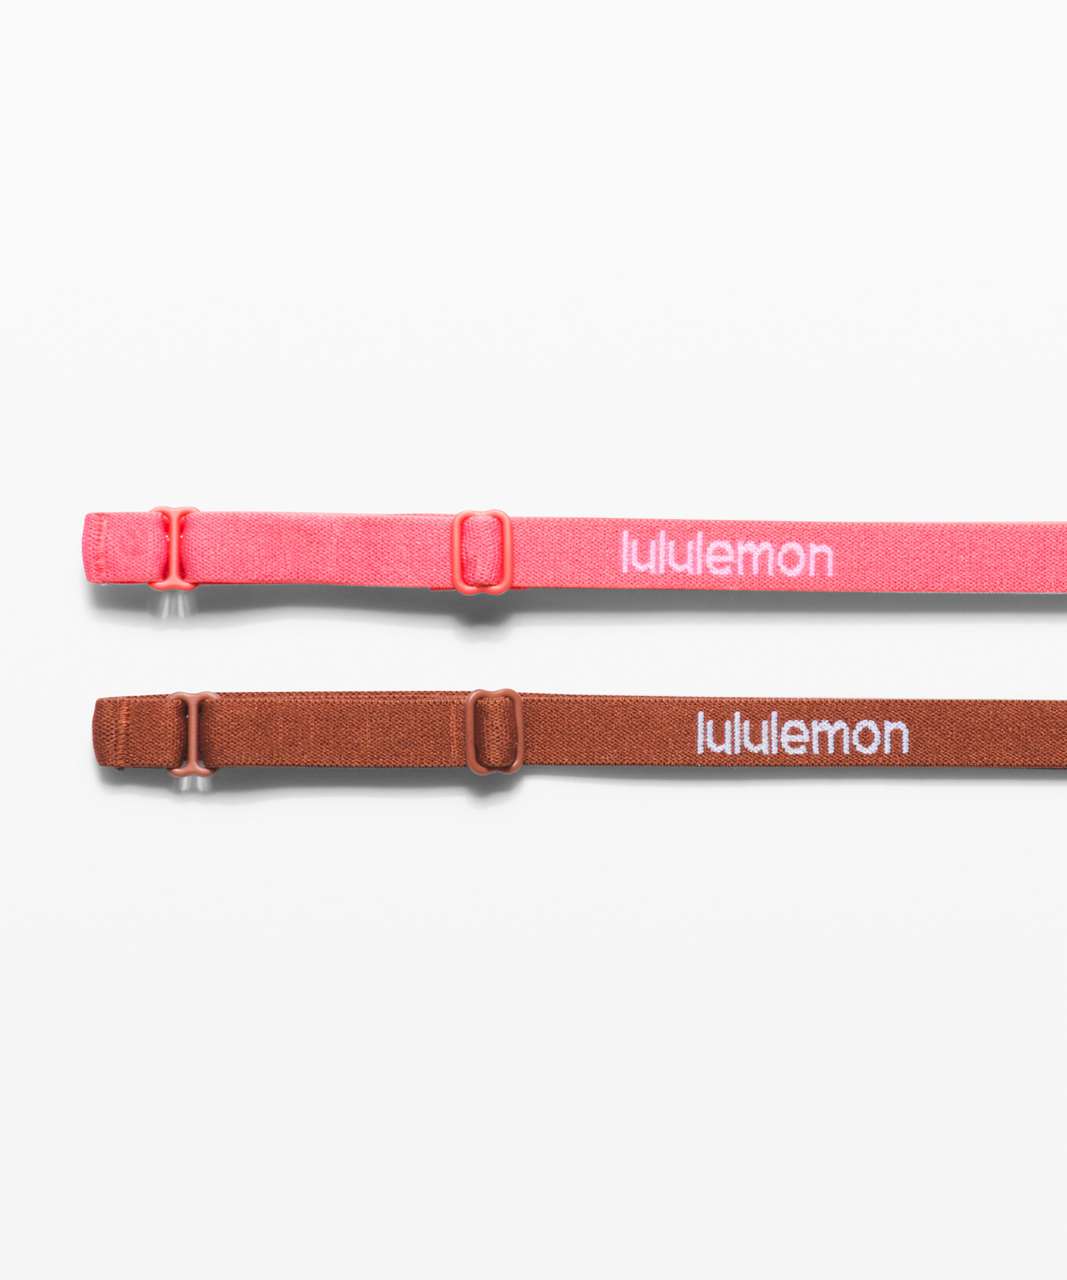 Lululemon Get in Line Headband *2 Pack - Guava Pink / Dark Terracotta